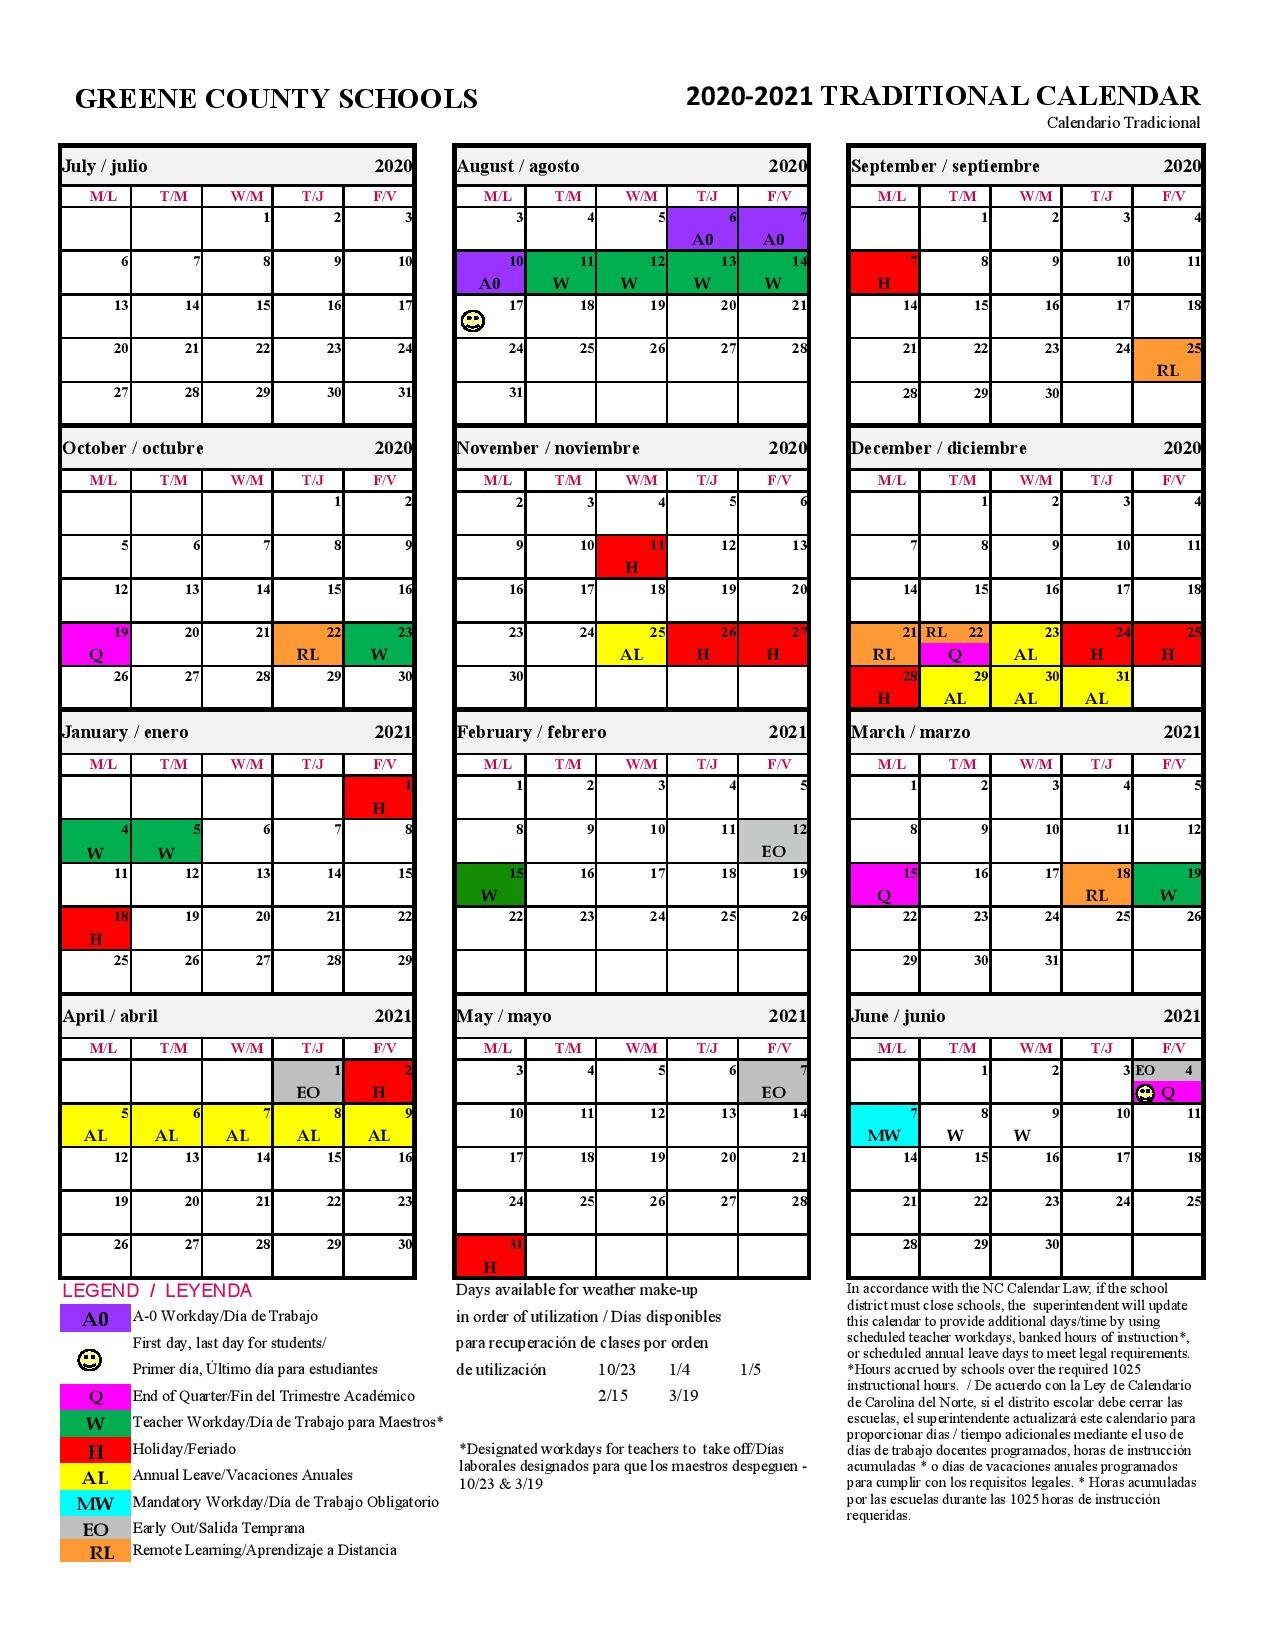 Greene County Schools Releases An Updated 2020 2021 Calendar Neuse News